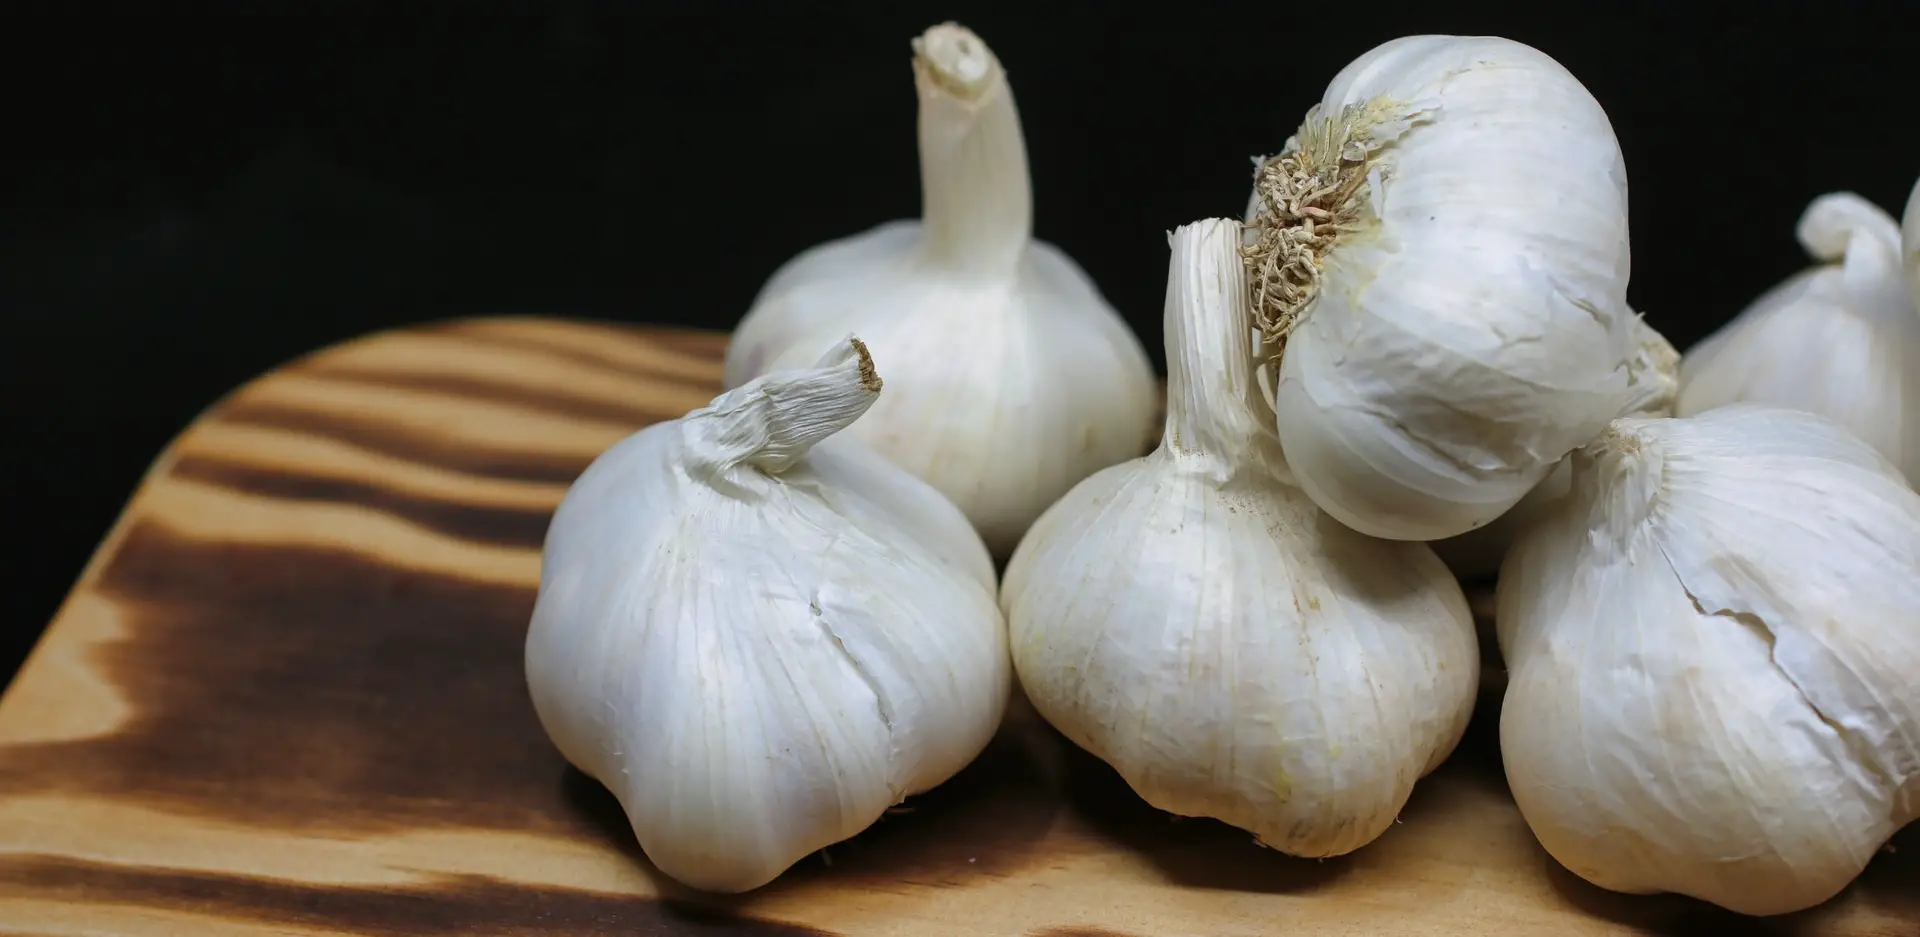 Does garlic kill bedbugs?